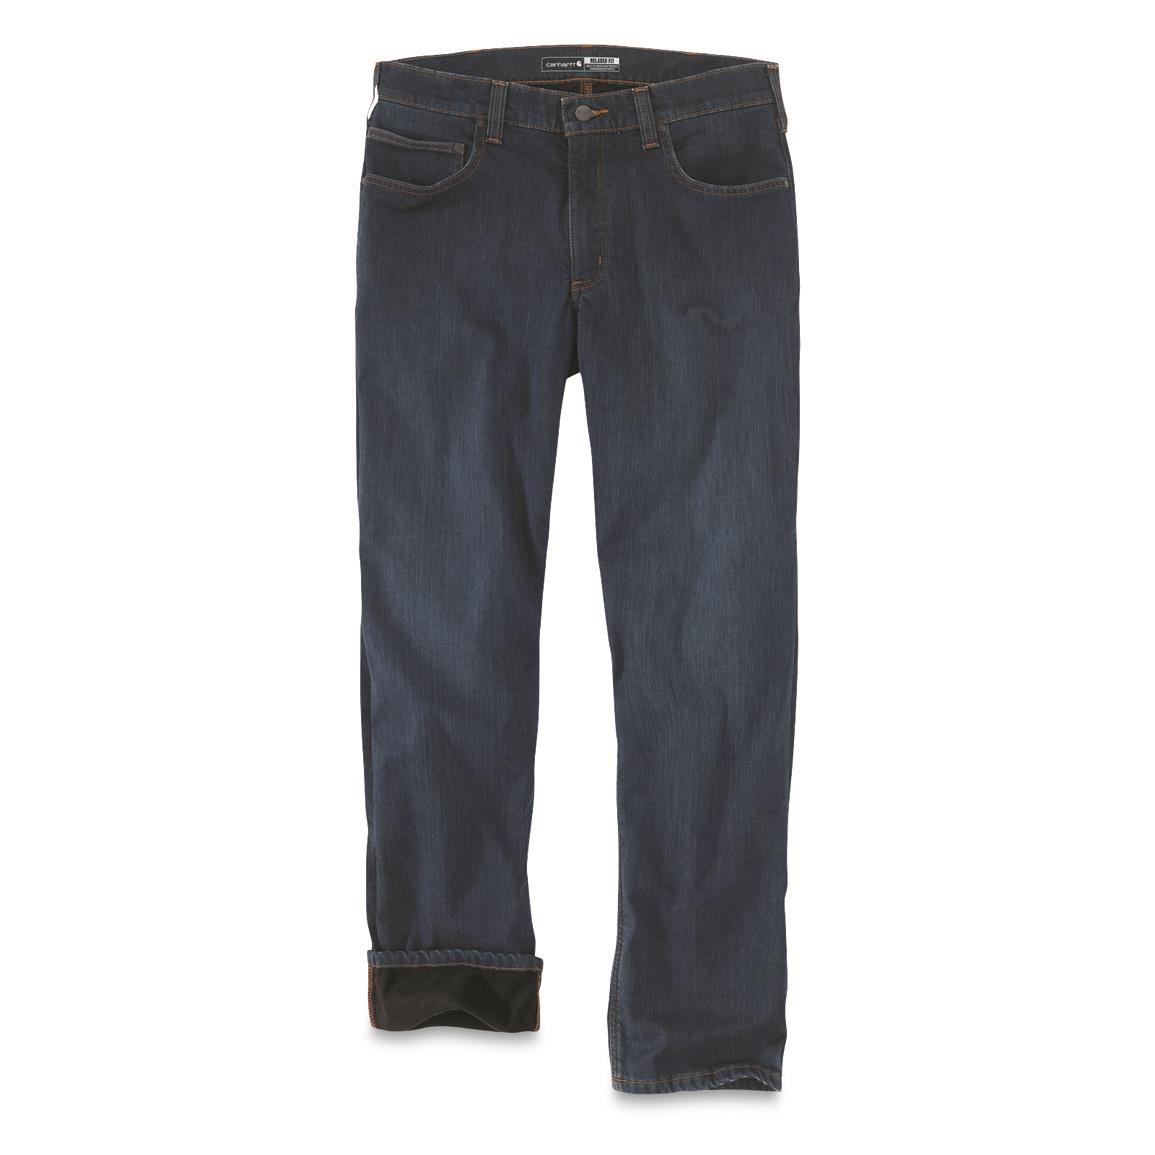 Carhartt Men's Rugged Flex Relaxed Fit Fleece-lined 5-pocket Jeans, Rapids